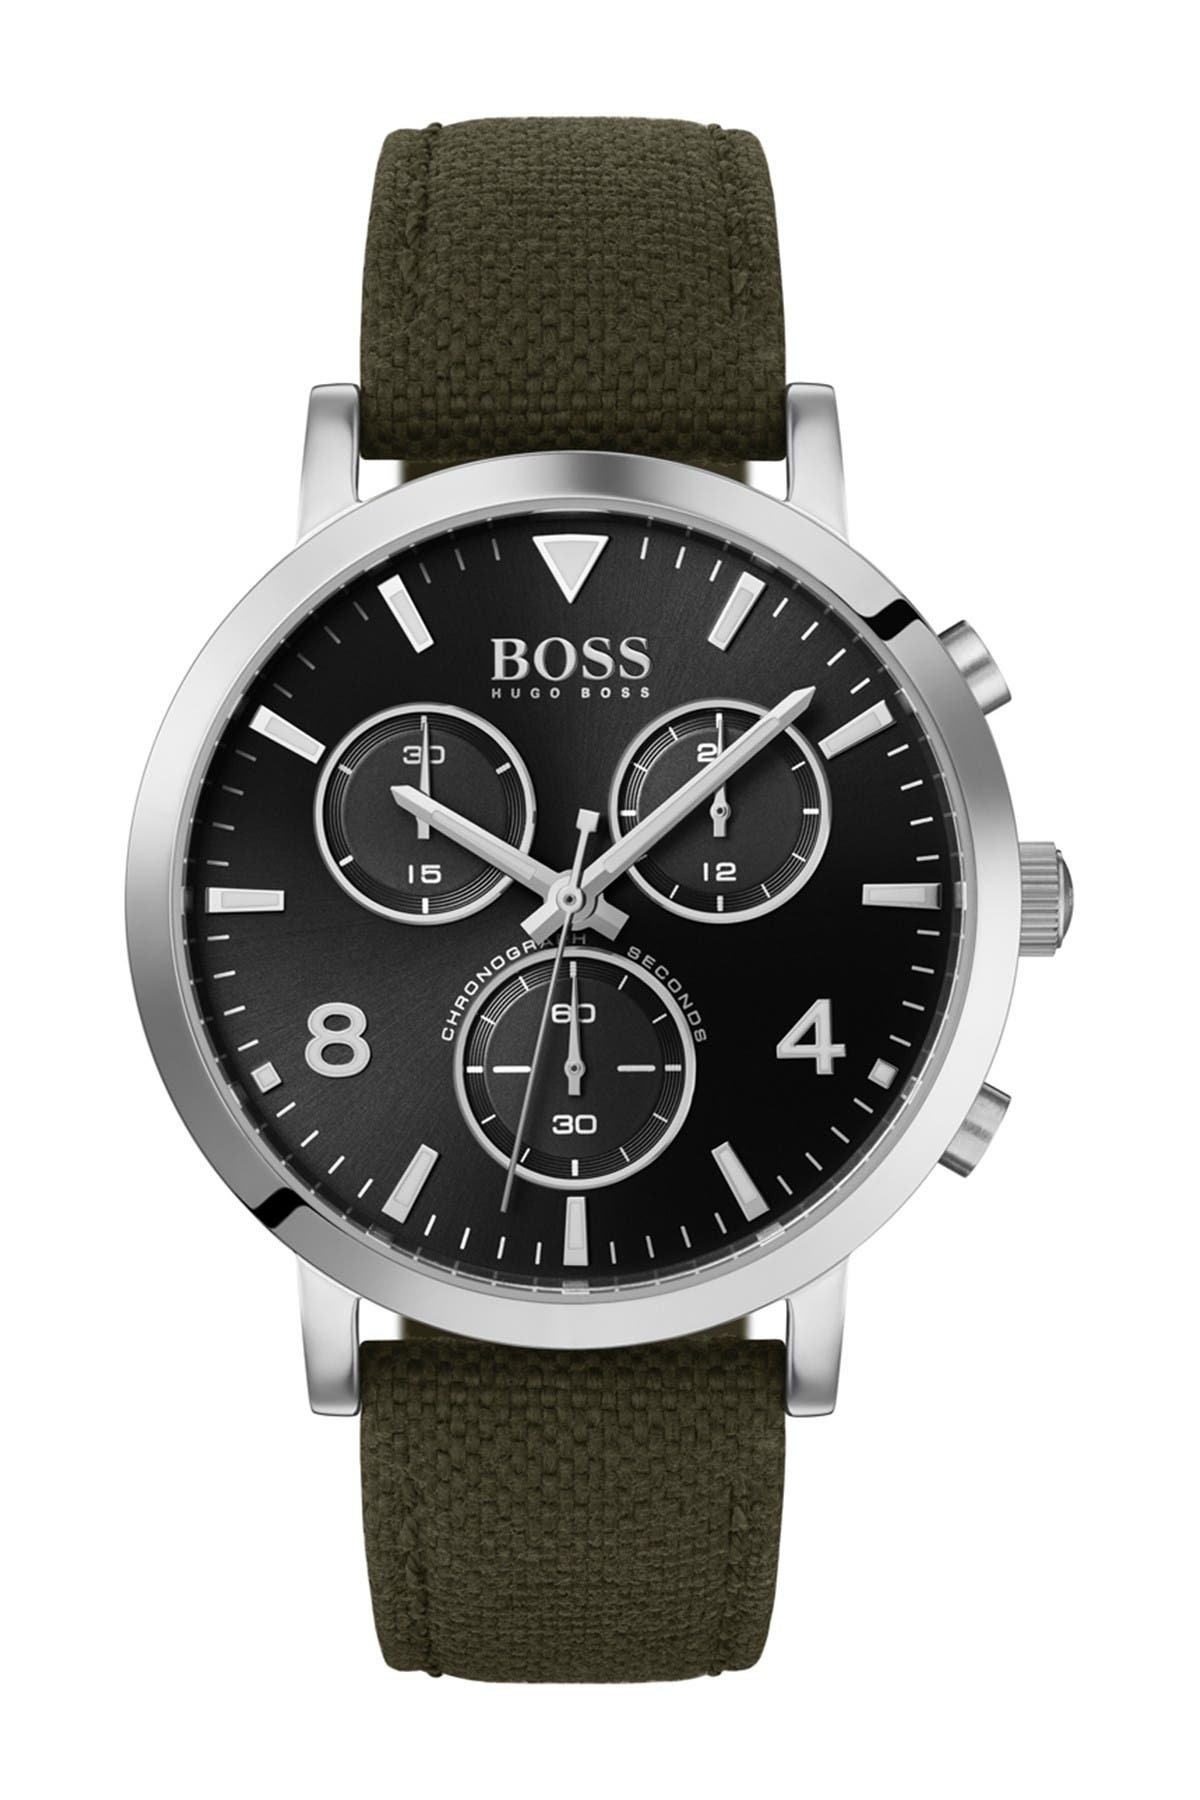 boss men's chronograph watch